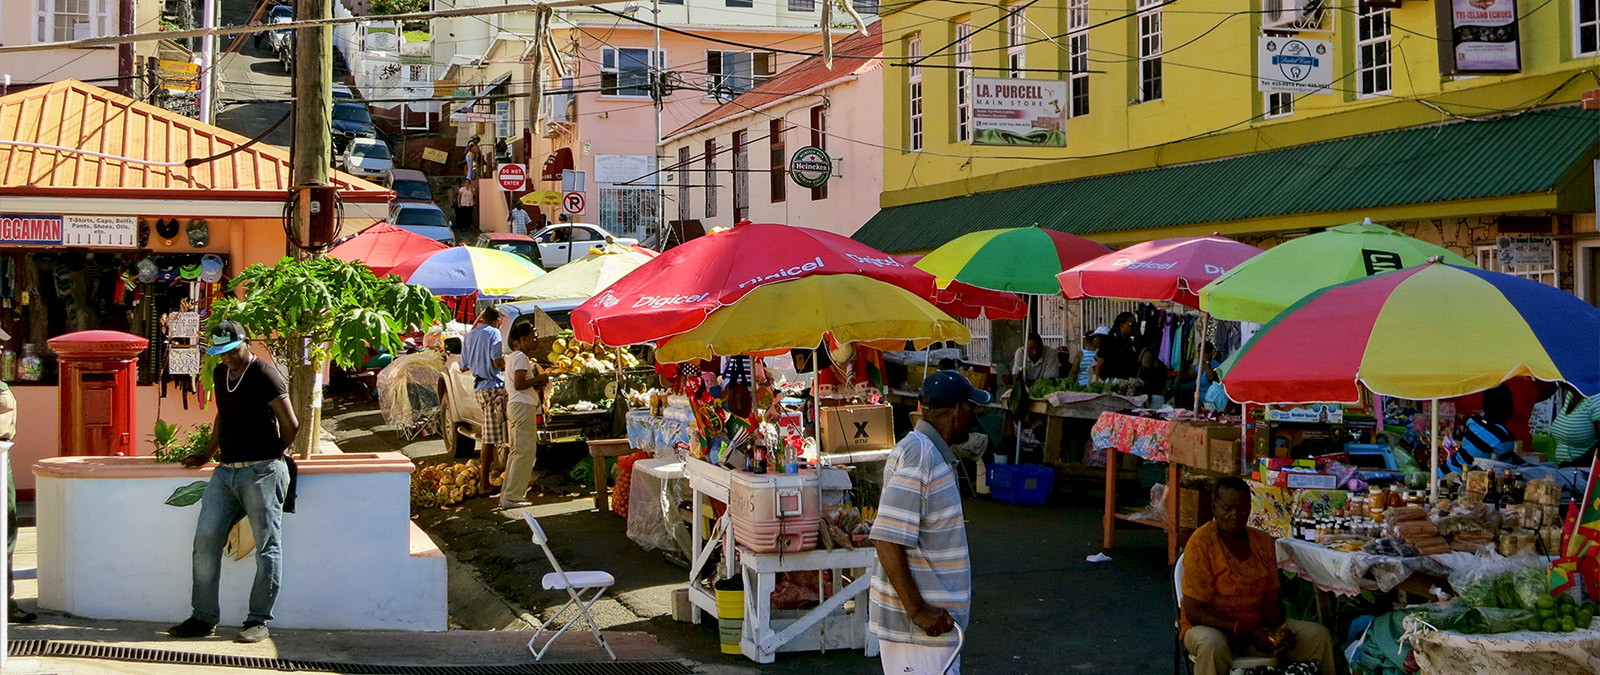 St. George's Town in Grenada - Caribbean Island